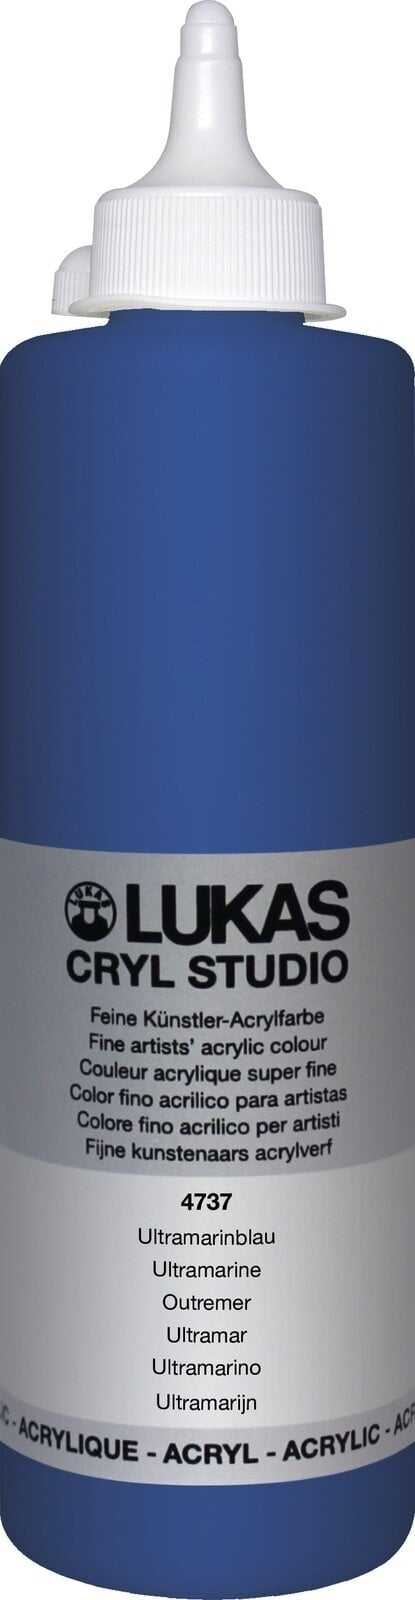 Pintura acrílica Lukas Cryl Studio Acrylic Paint 500 ml Ultramarine Pintura acrílica